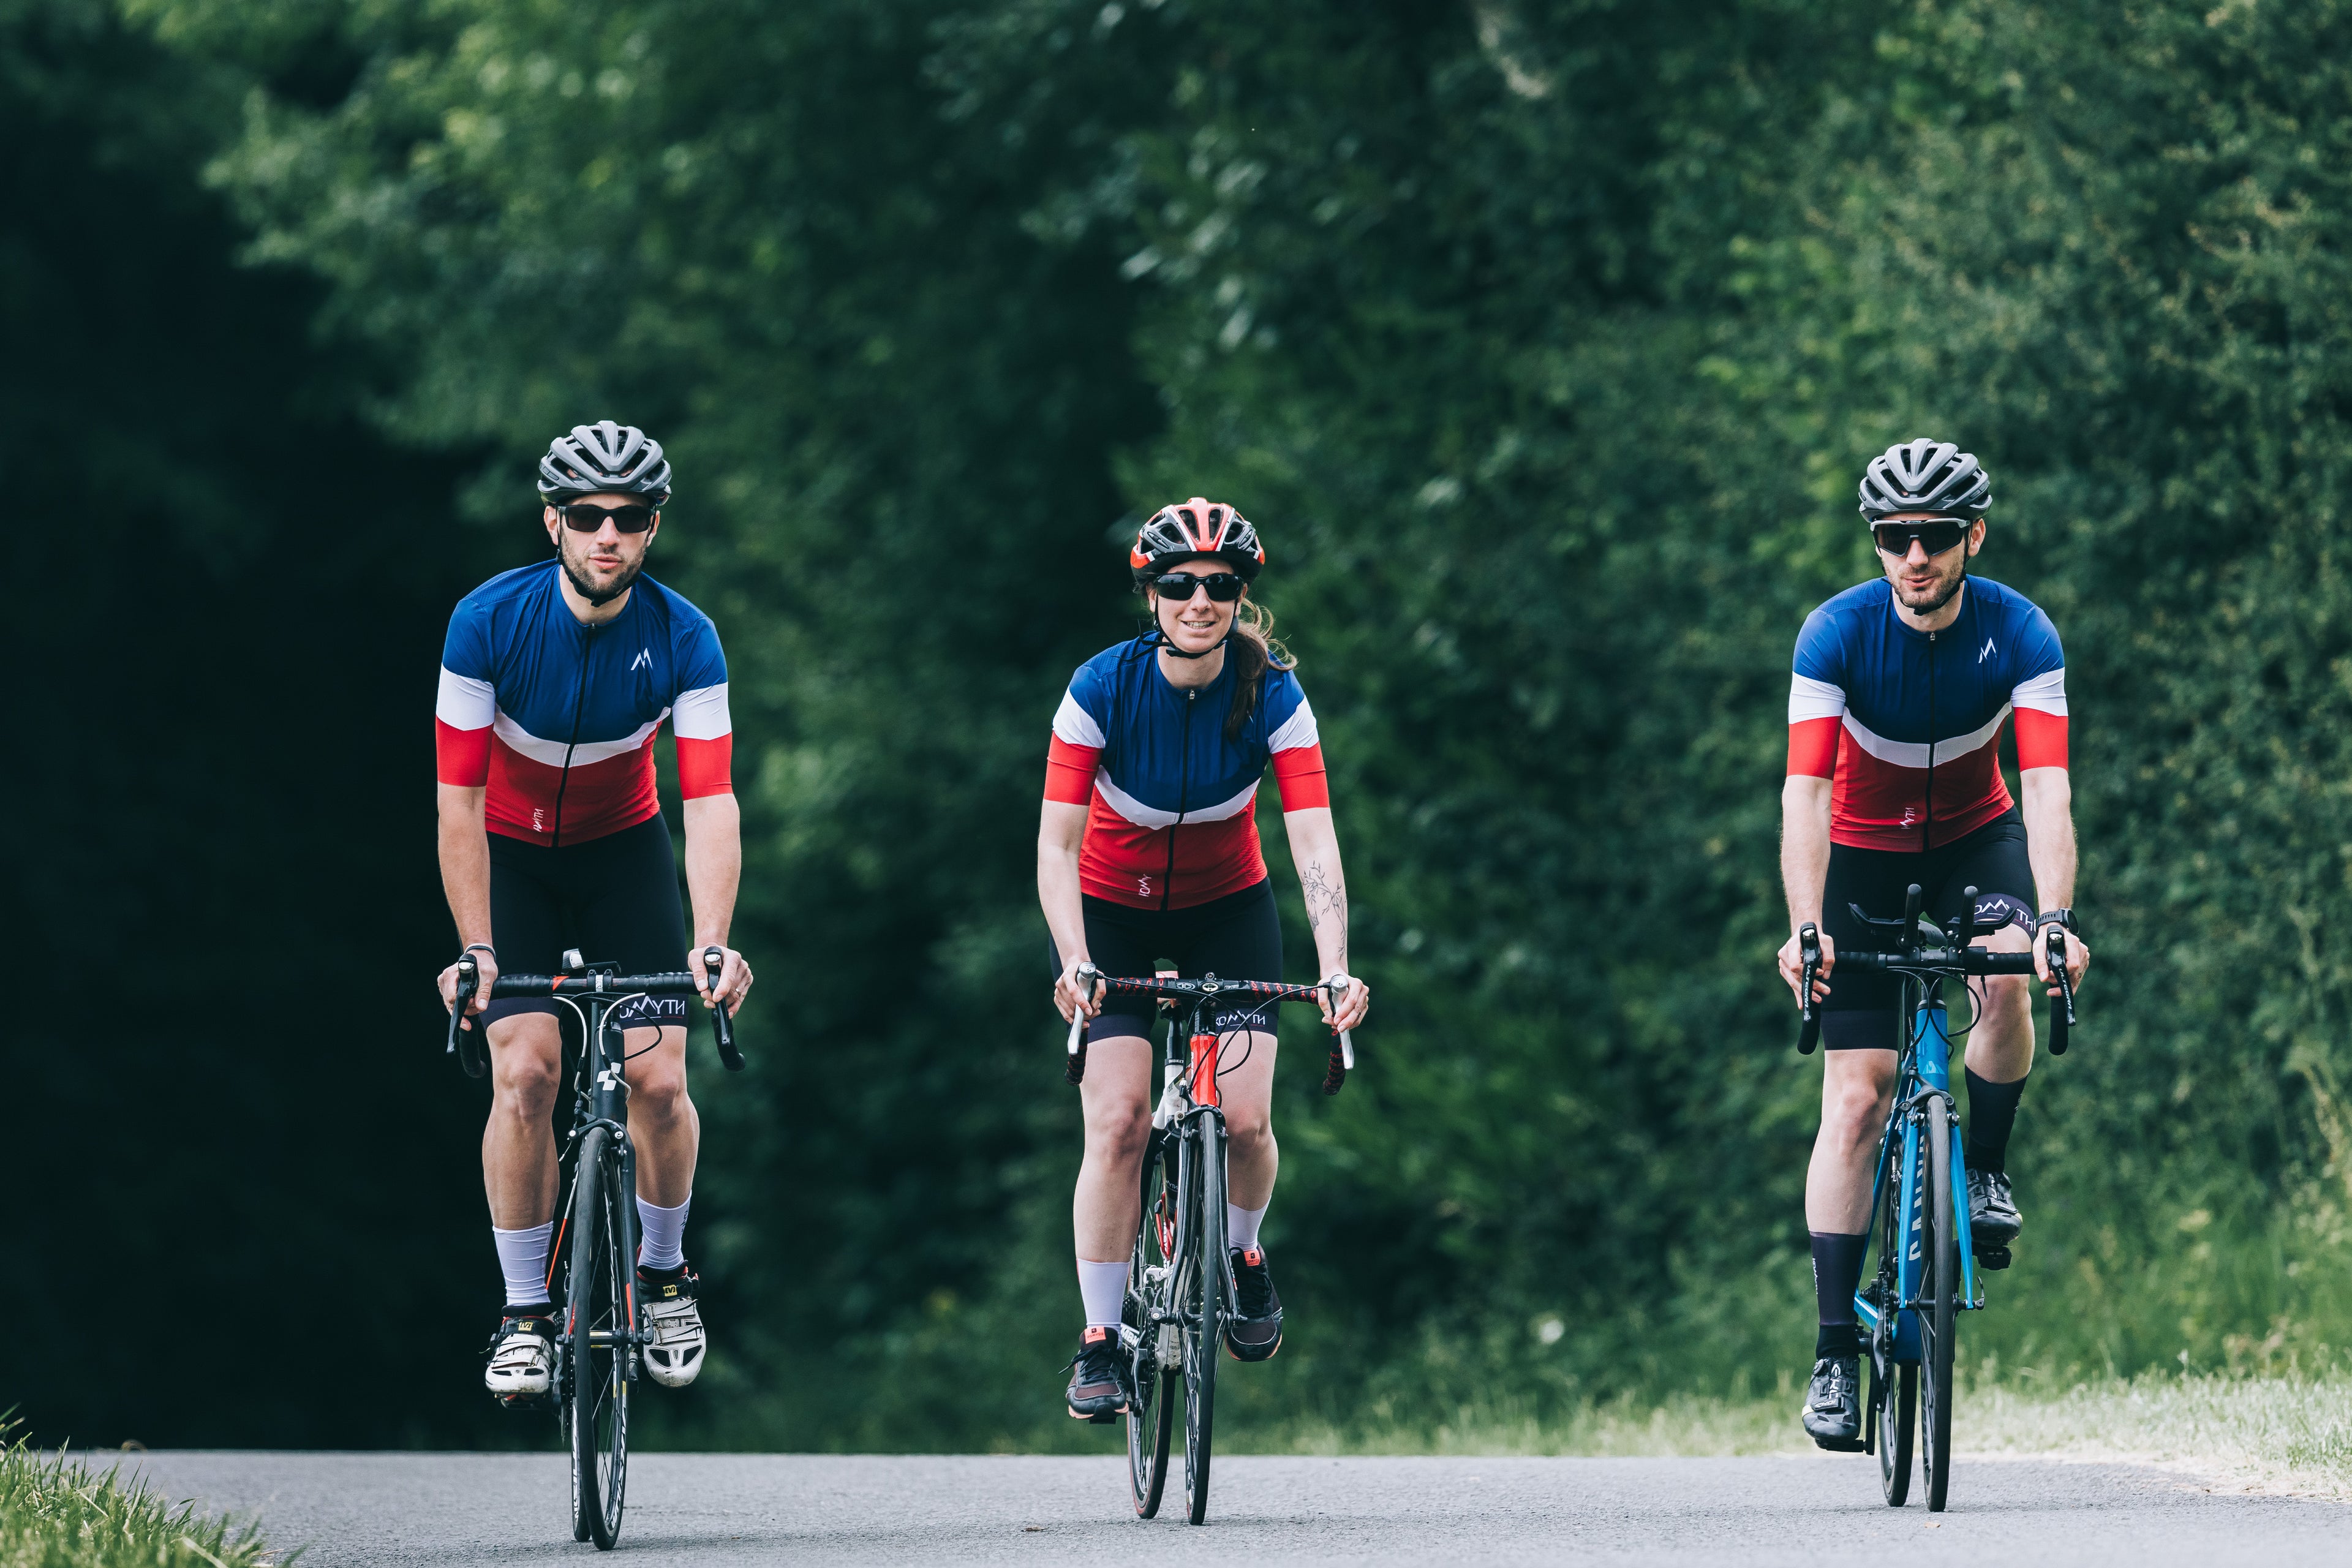 Cyclistes avec maillot komyth de gamme allure team france (bleu blanc rouge)